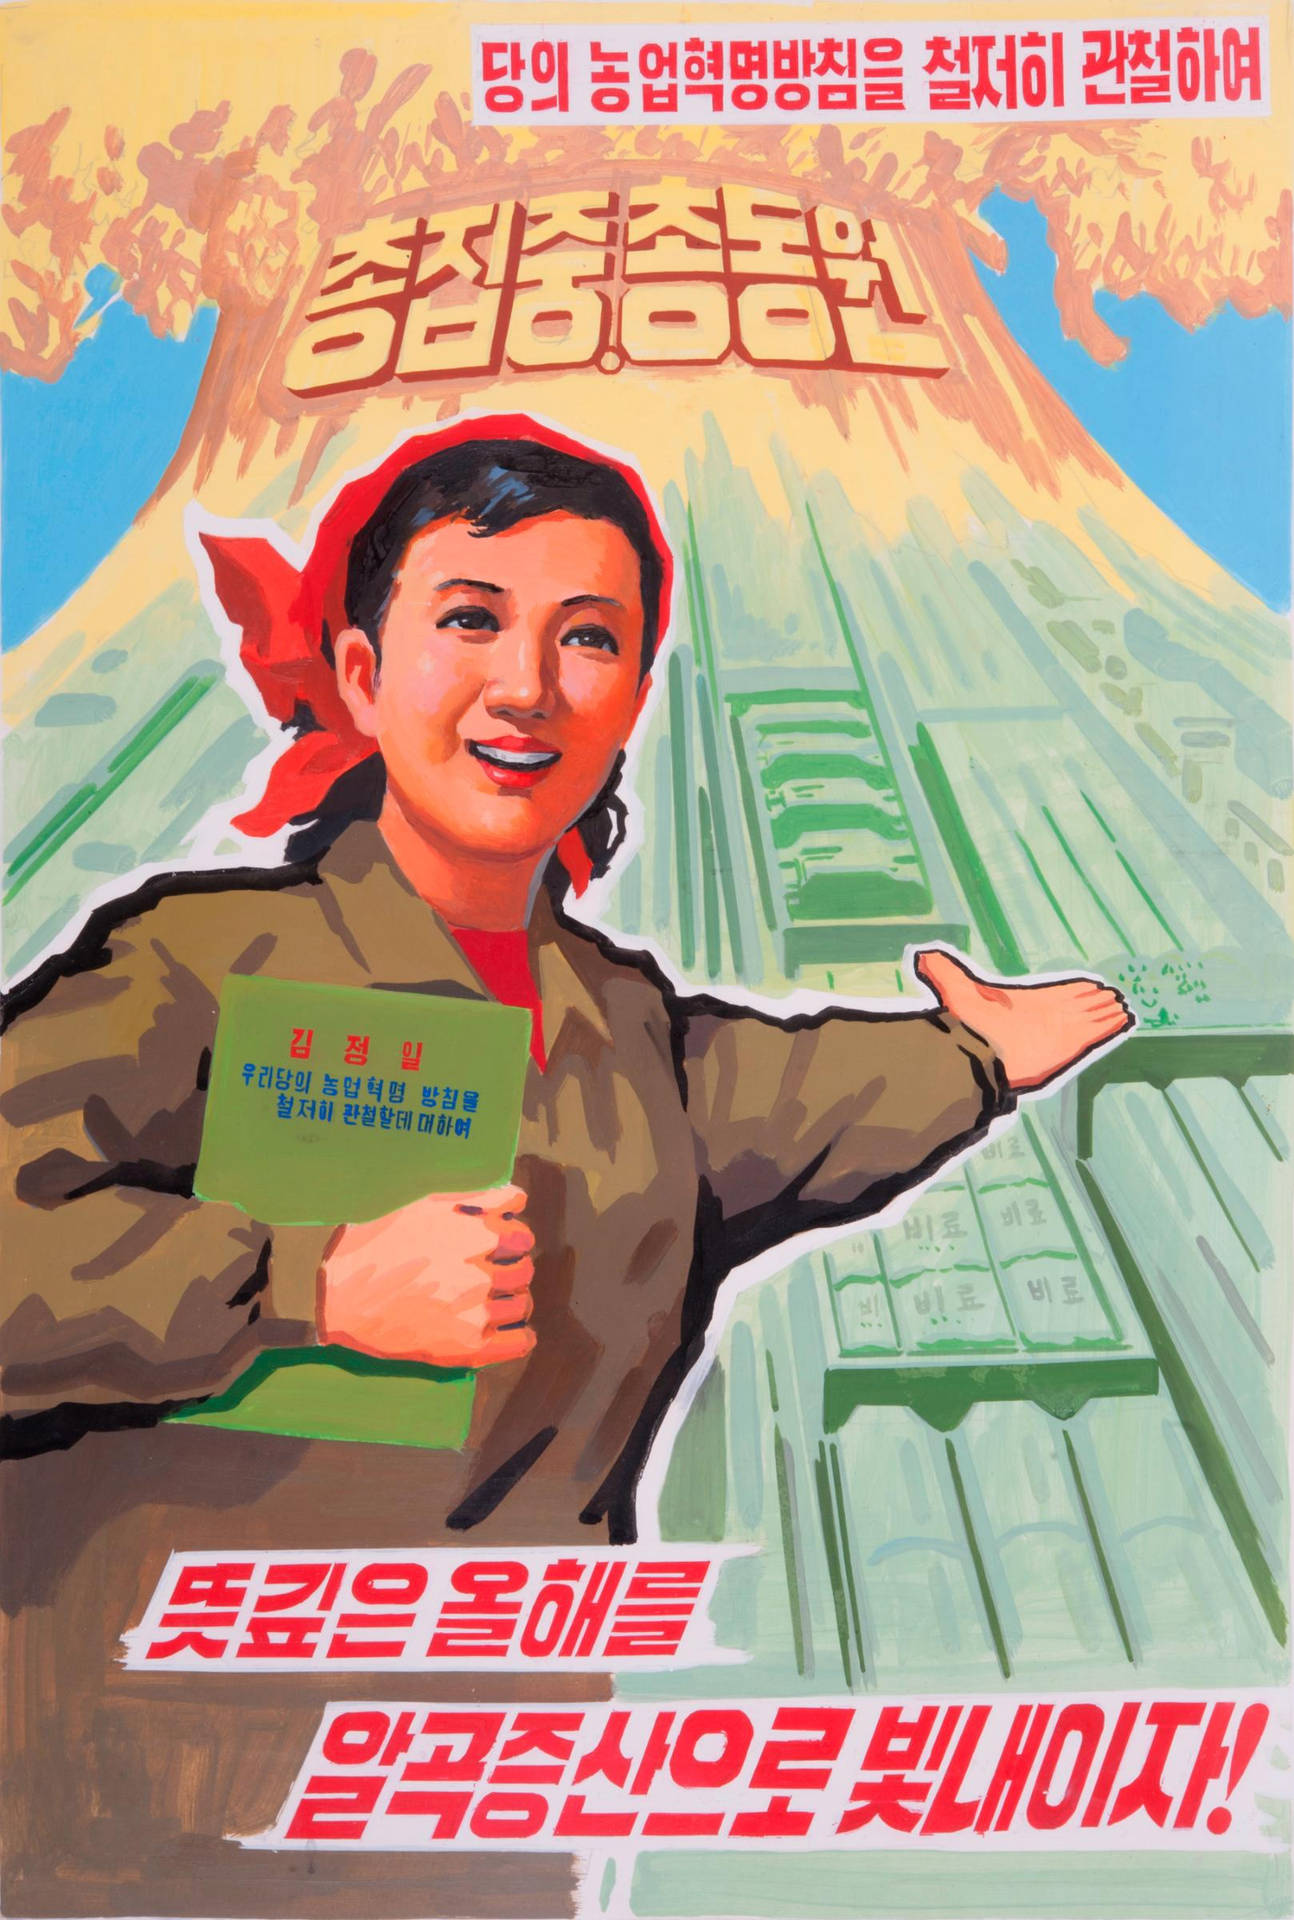 North Korea Propaganda Poster